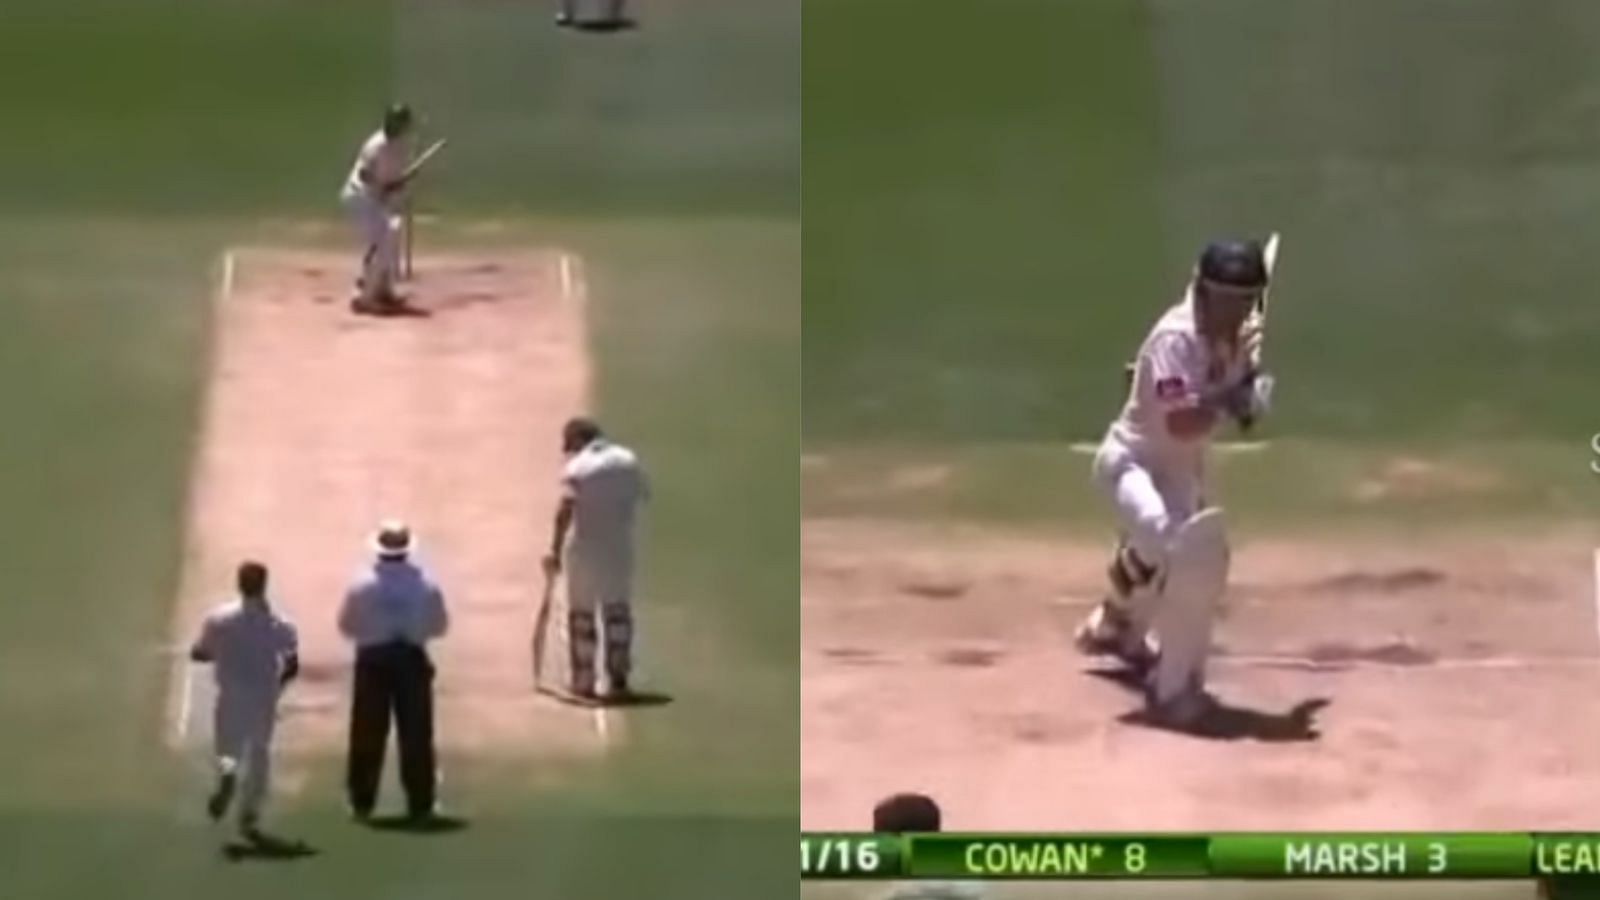 Umesh Yadav has bowled some fantastic deliveries (Image: YouTube)